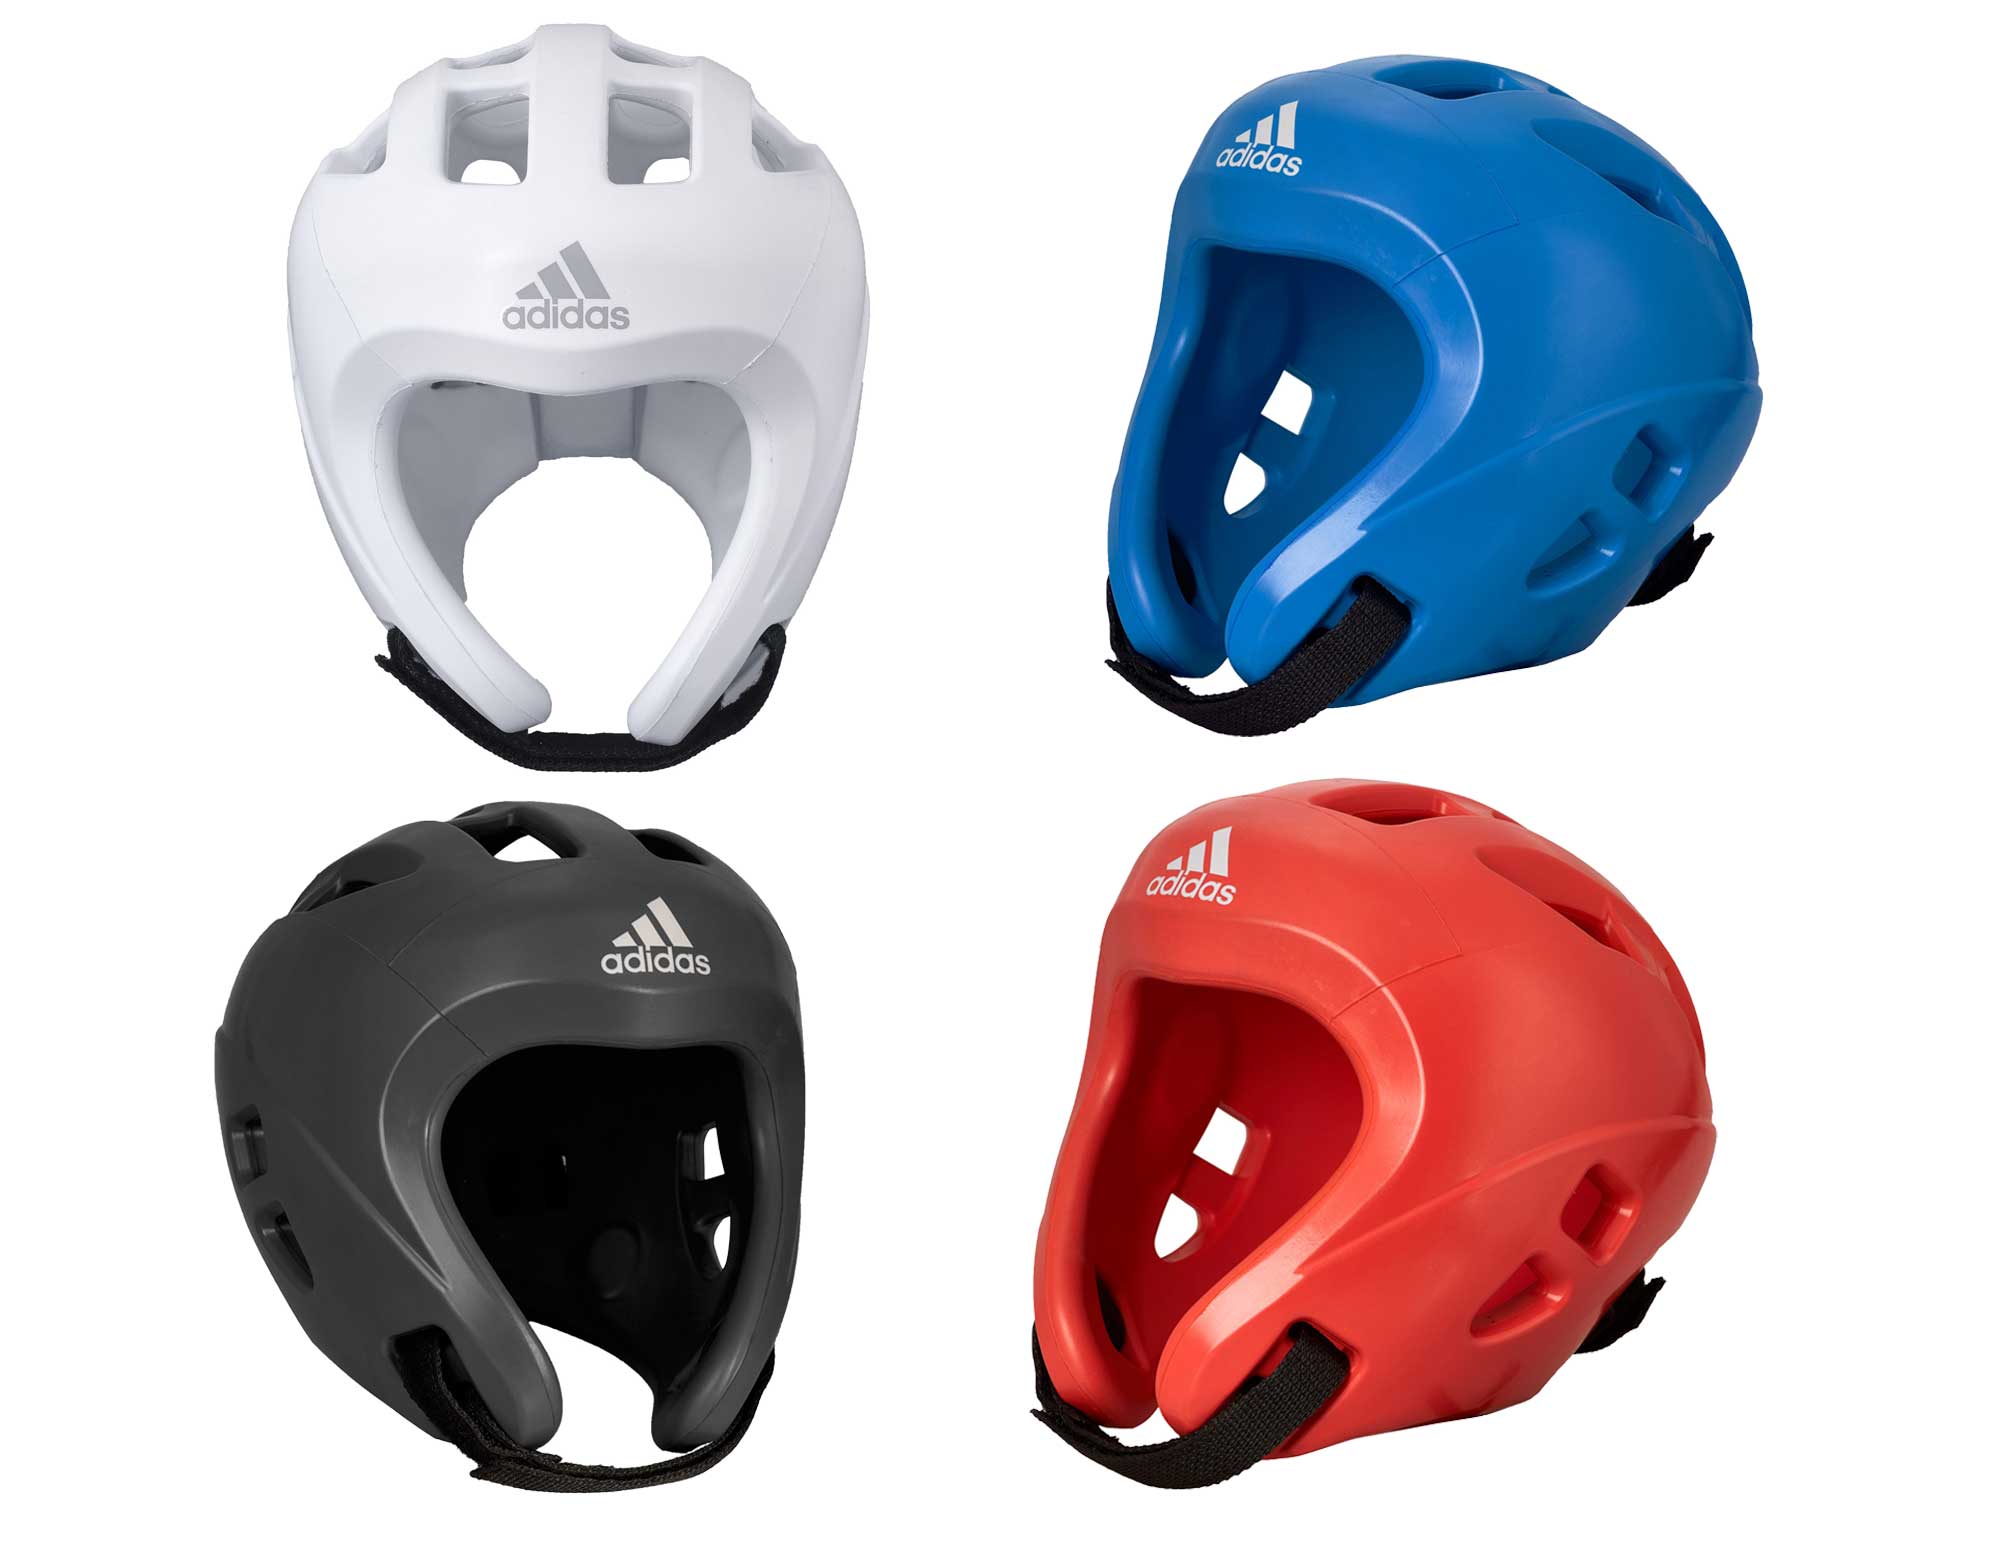 Adidas Kopfschutz Kickboxing in 4 Farben